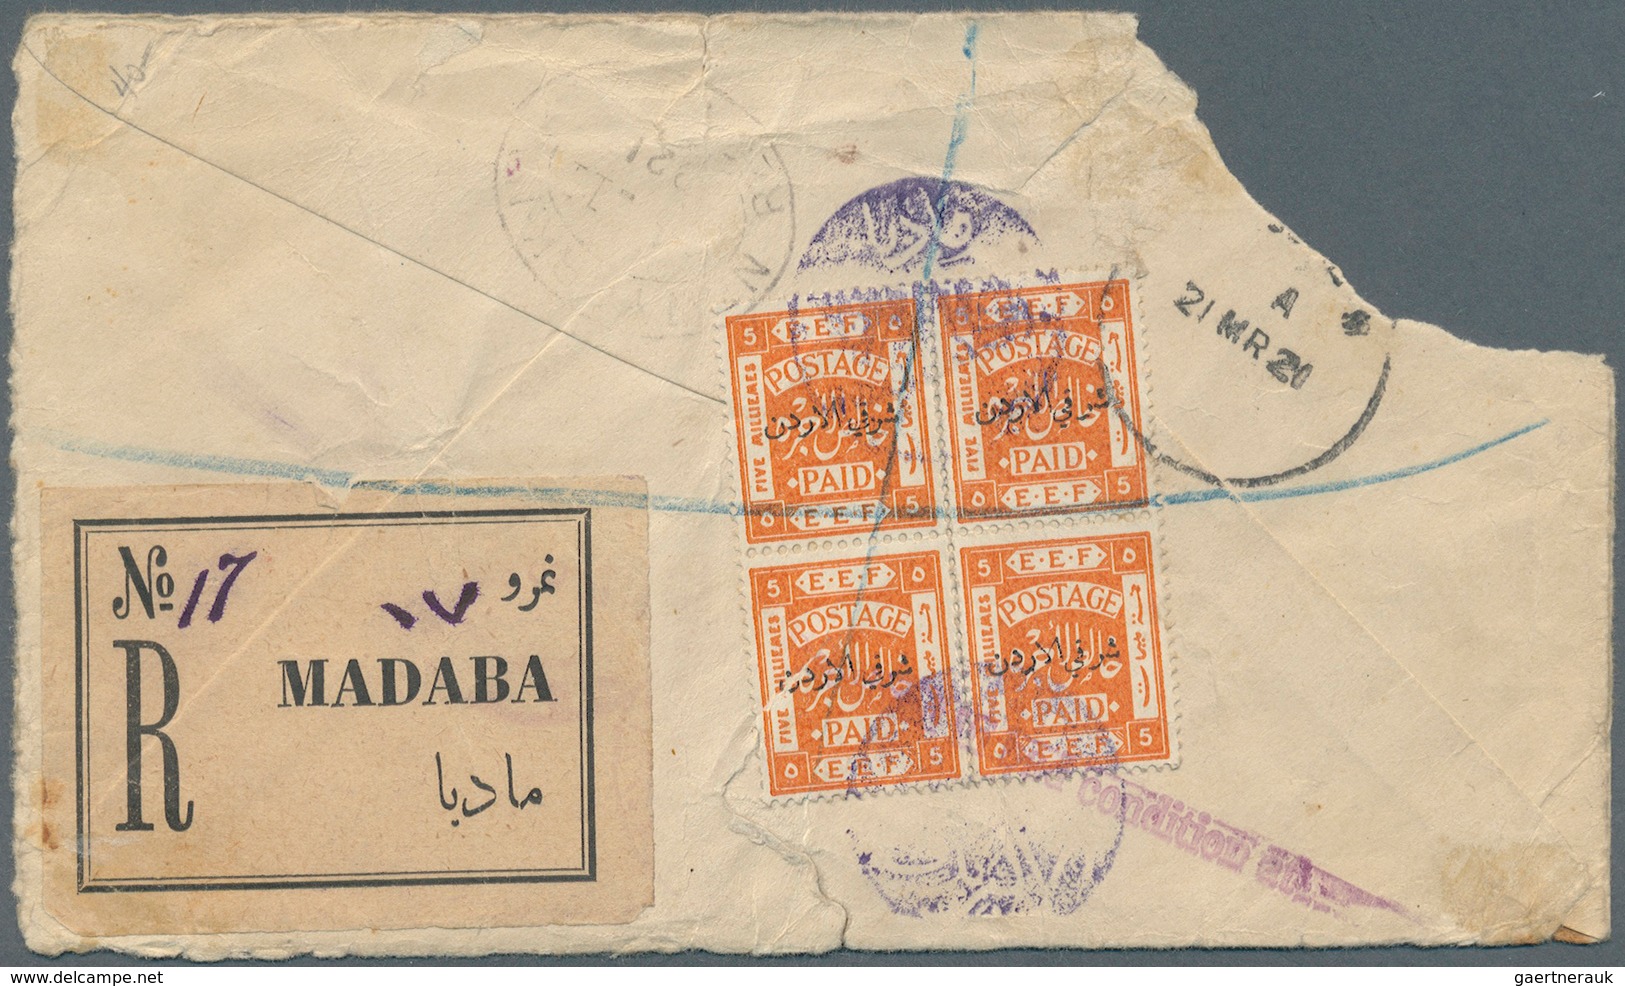 Jordanien: MADABA (type D1): 1925 (9.12.), Cut Down Cover Bearing Four Optd. Palestine Stamps Used W - Jordanien